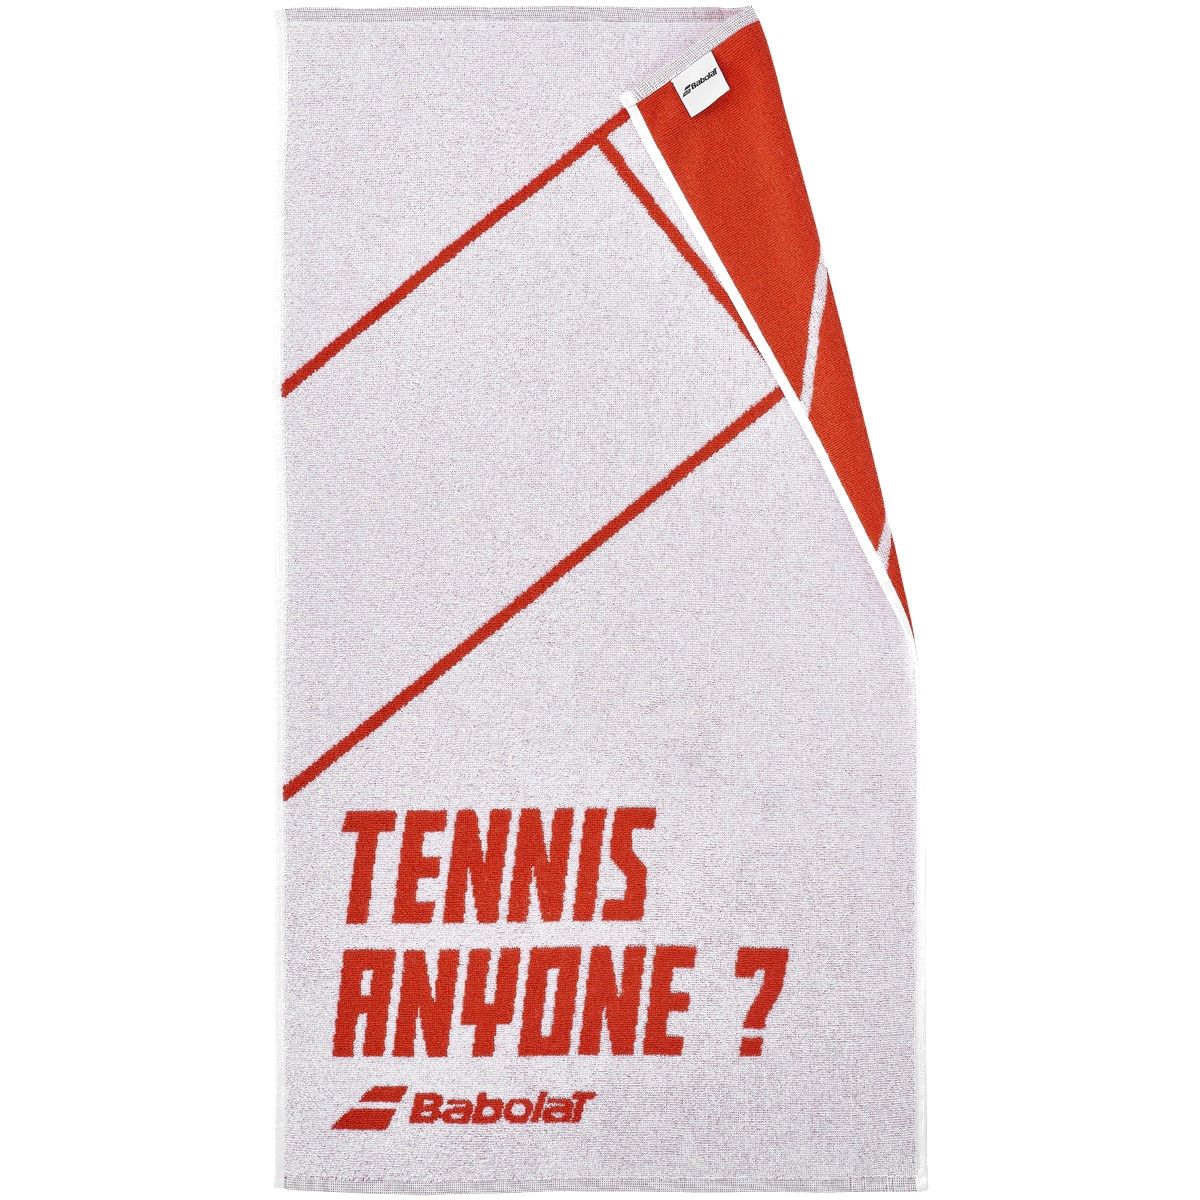 https://www.e-tennis.com/pub/media/catalog/product/cache/f5f3da80ad7b670245aea7e970662954/5/u/5ua1391-1054_basic_1.jpg